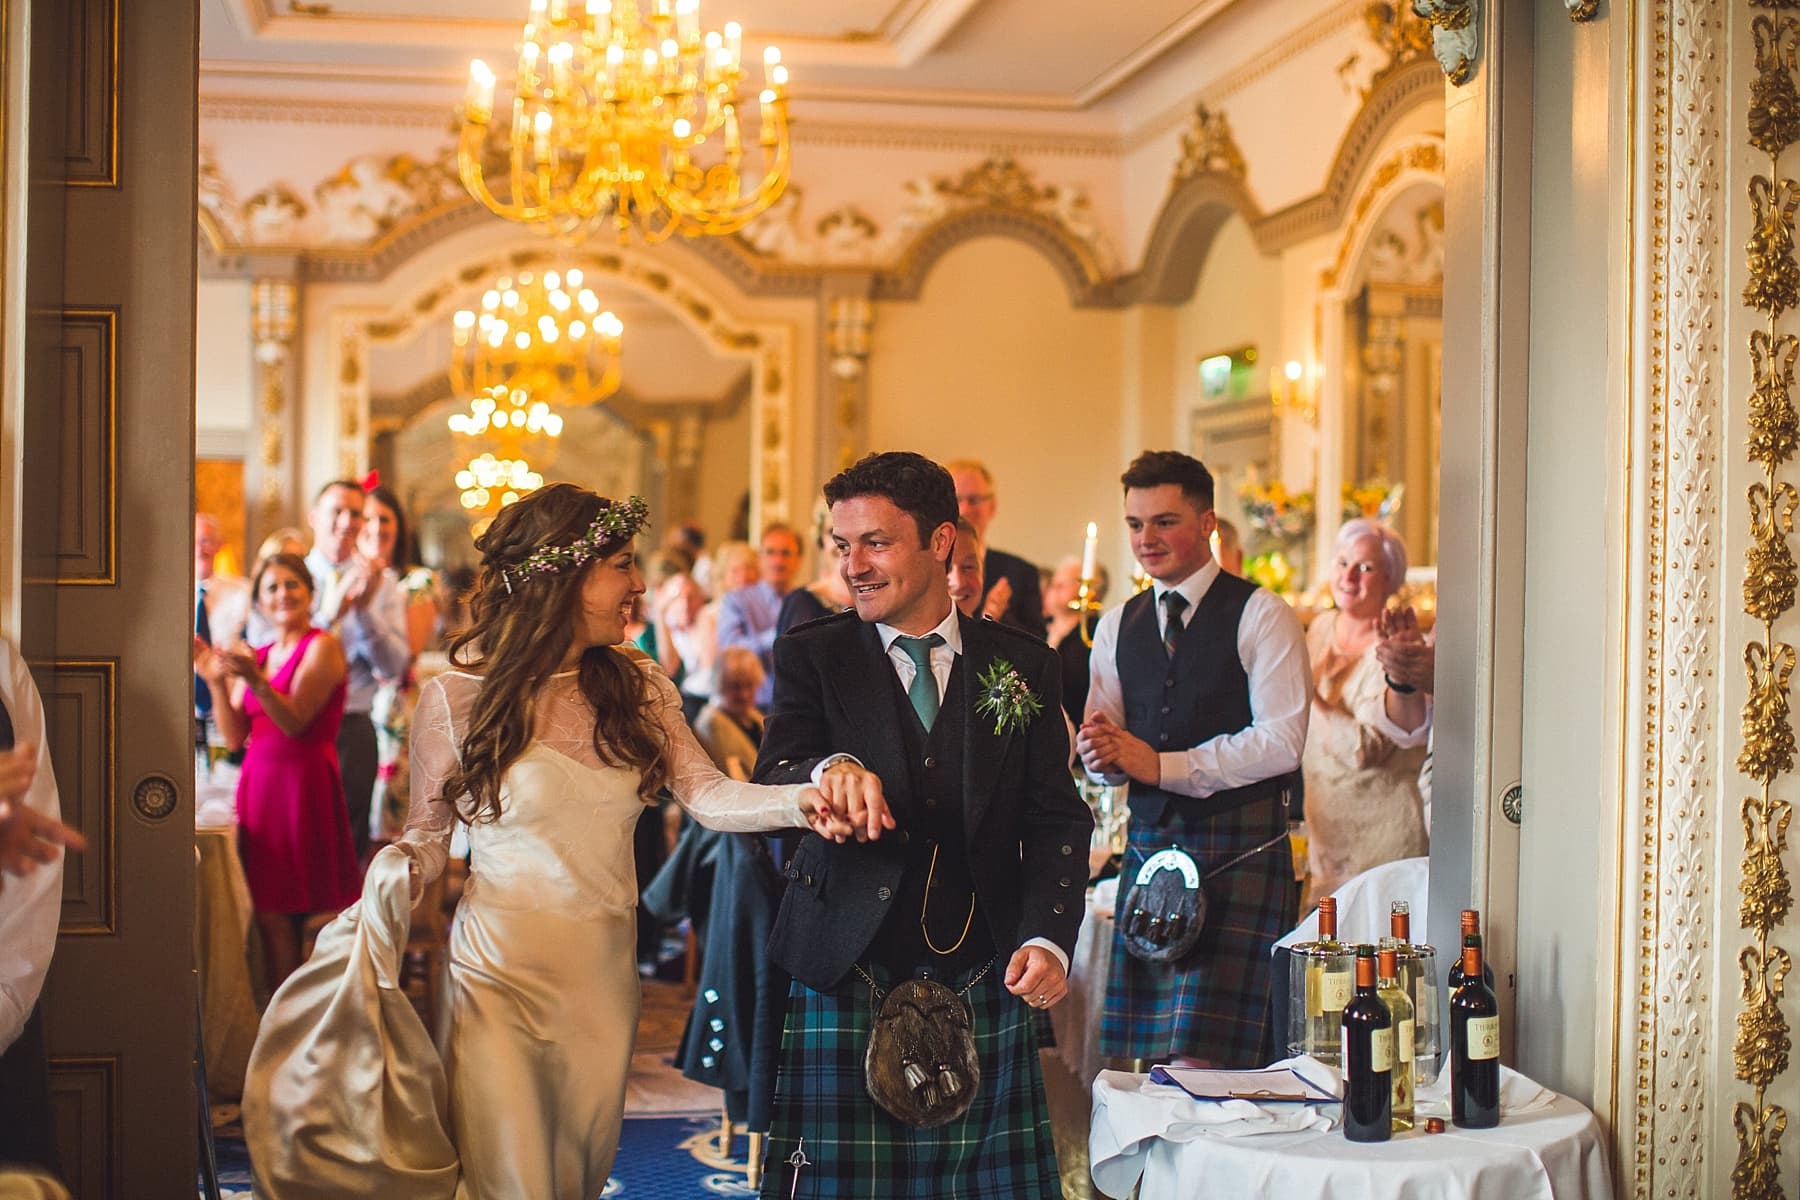 Markree Castle wedding,irish wedding photography,irish bride,scottish groom,